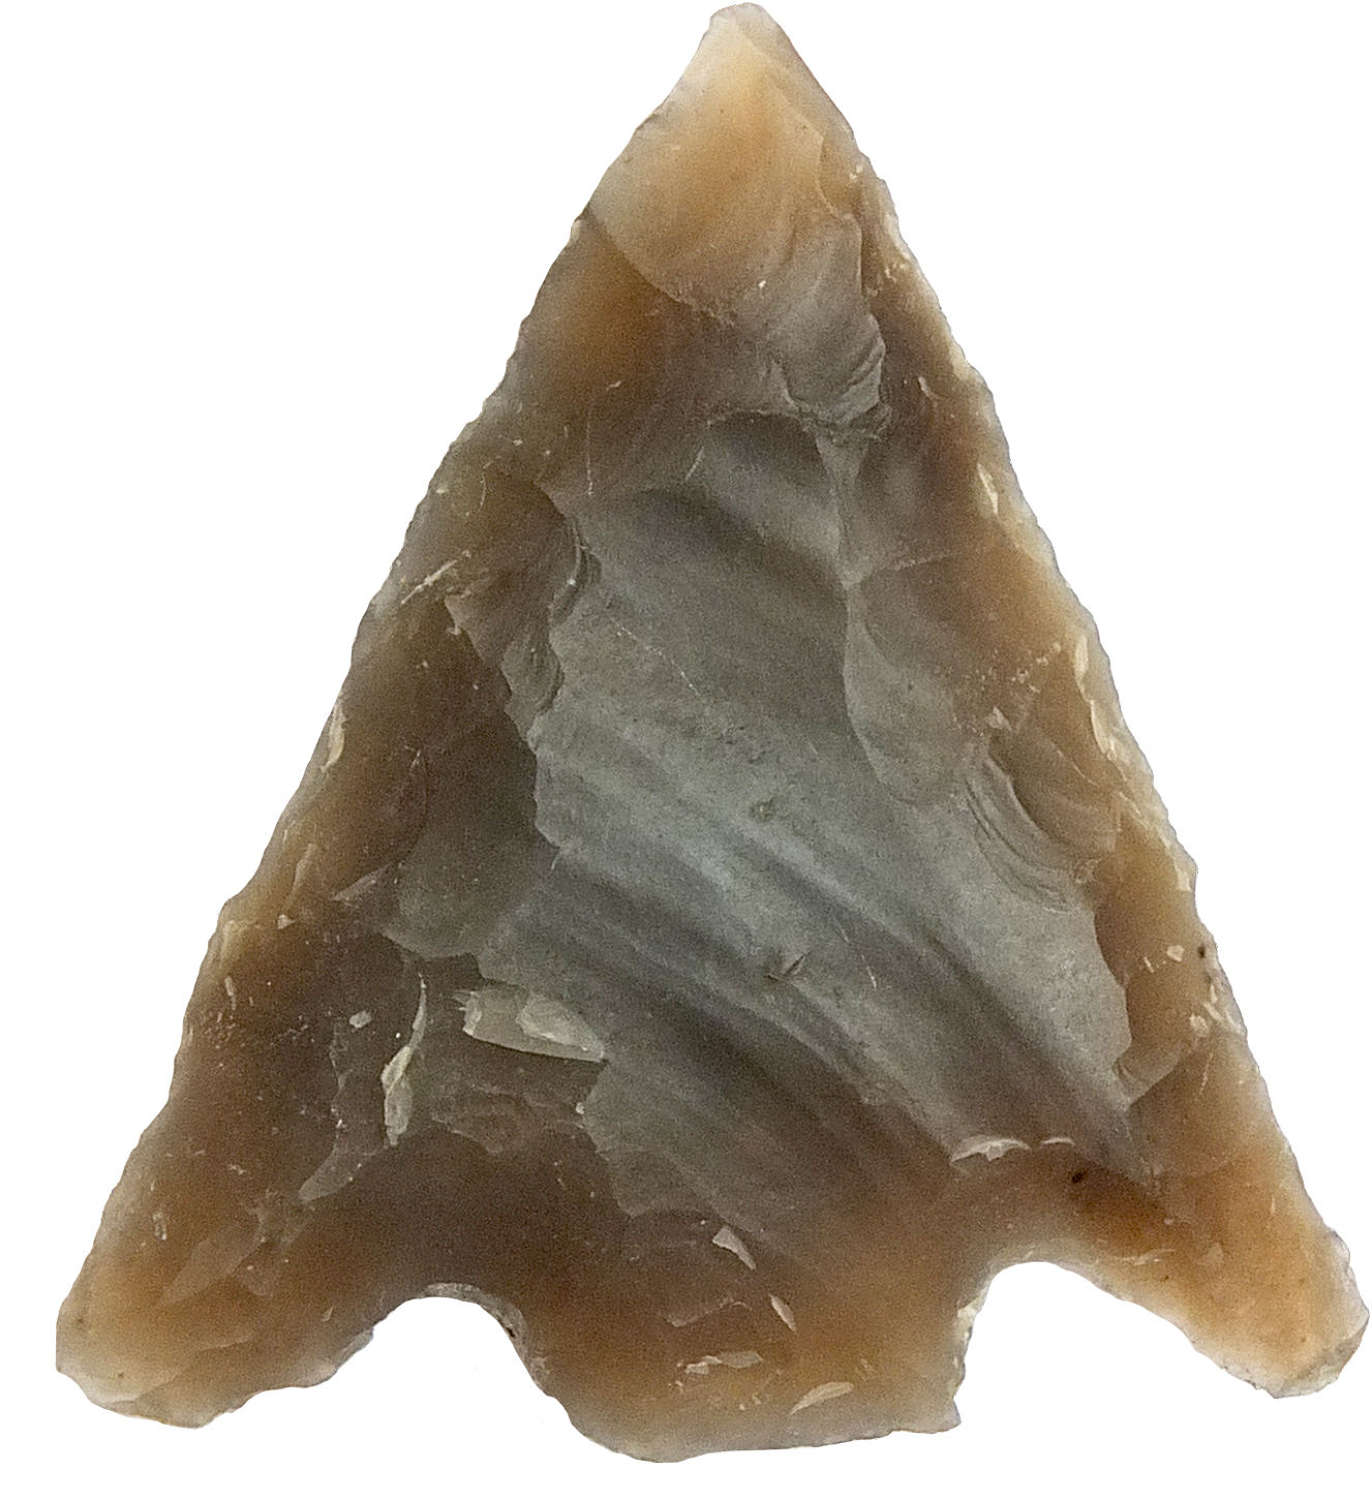 A fine North American Indian brown flint arrowhead